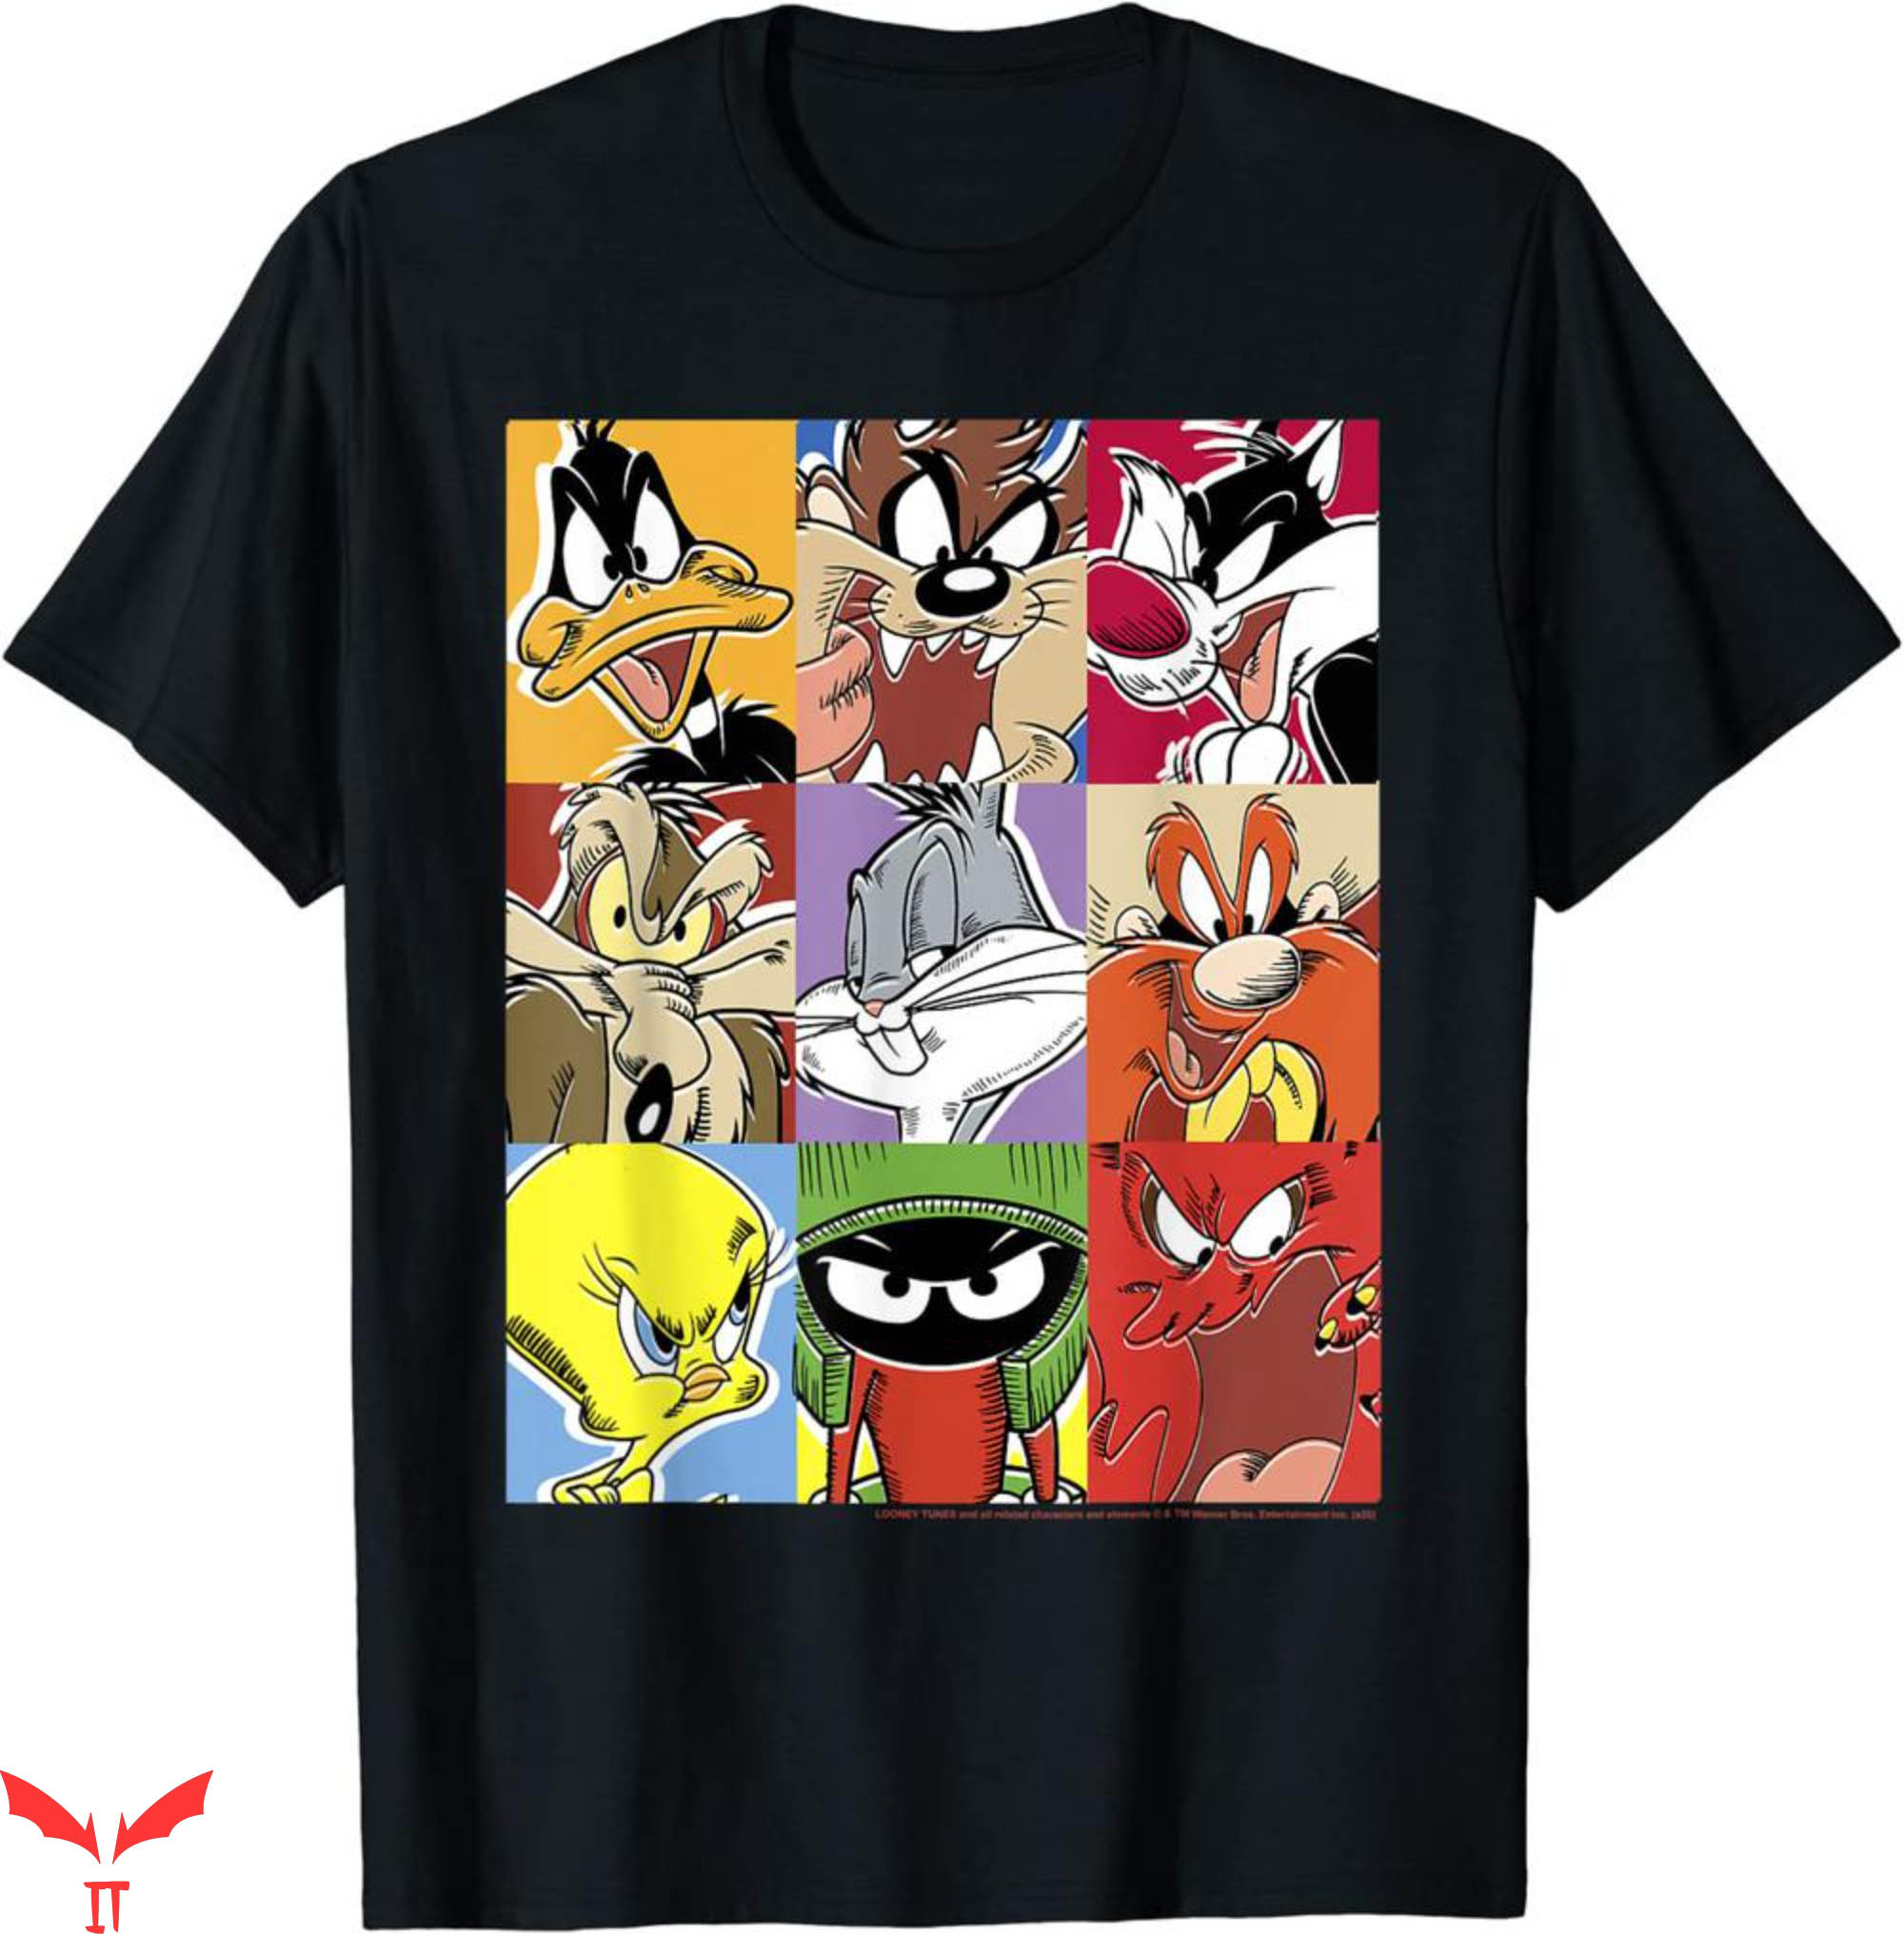 Vintage Looney Tunes T-Shirt Character Box Up Funny Cartoon